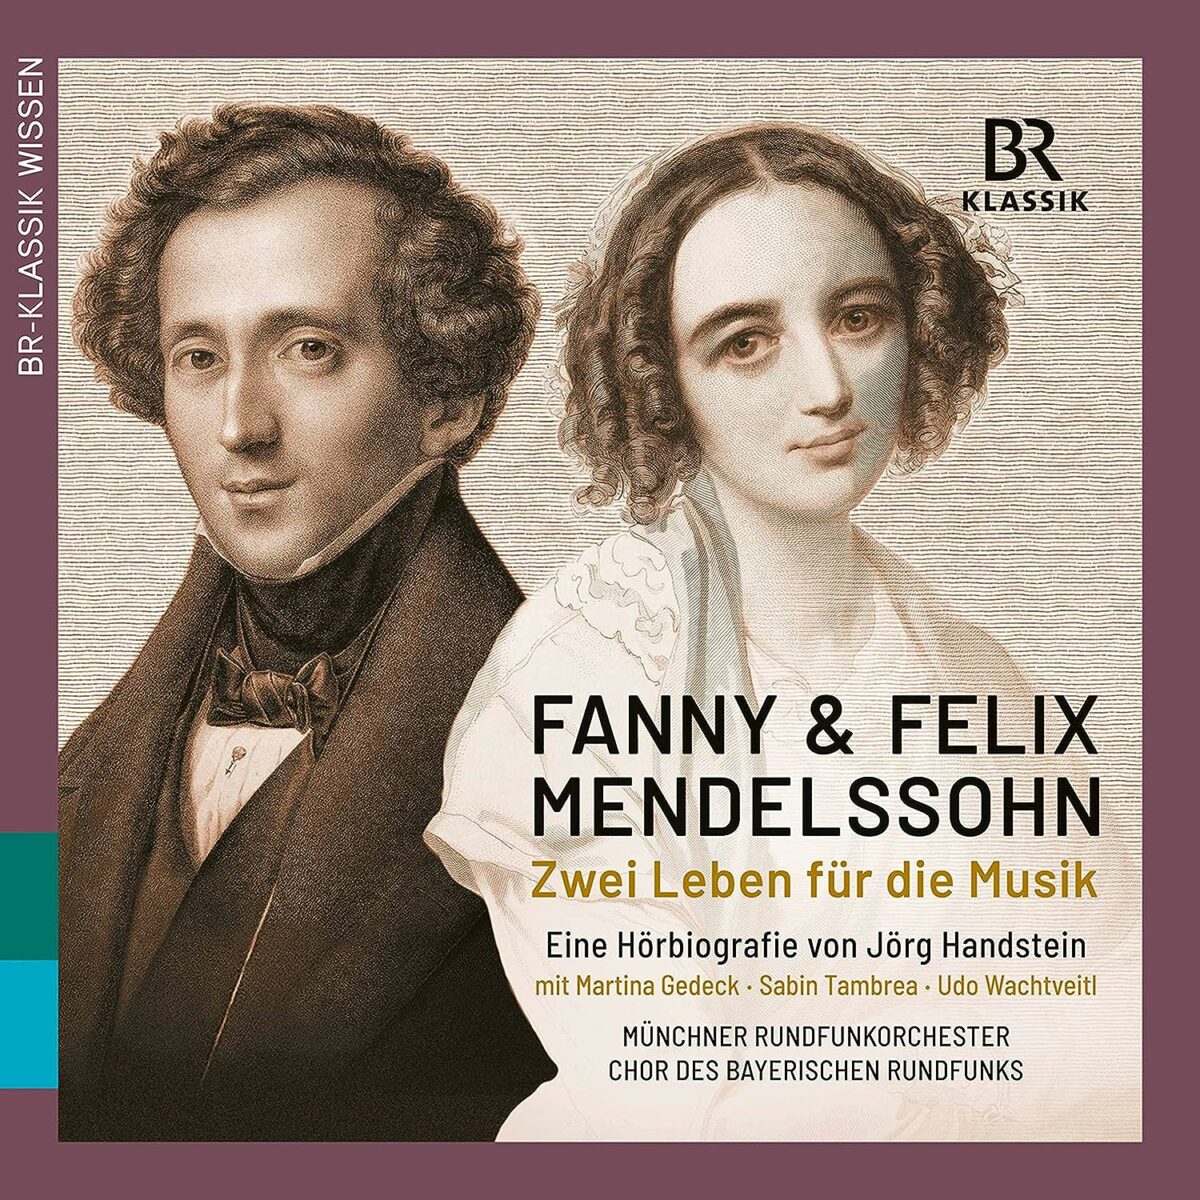 CD-Rezension: Fanny & Felix Mendelssohn. Zwei Leben für die Musik  klassik-begeistert.de, 8. August 2023